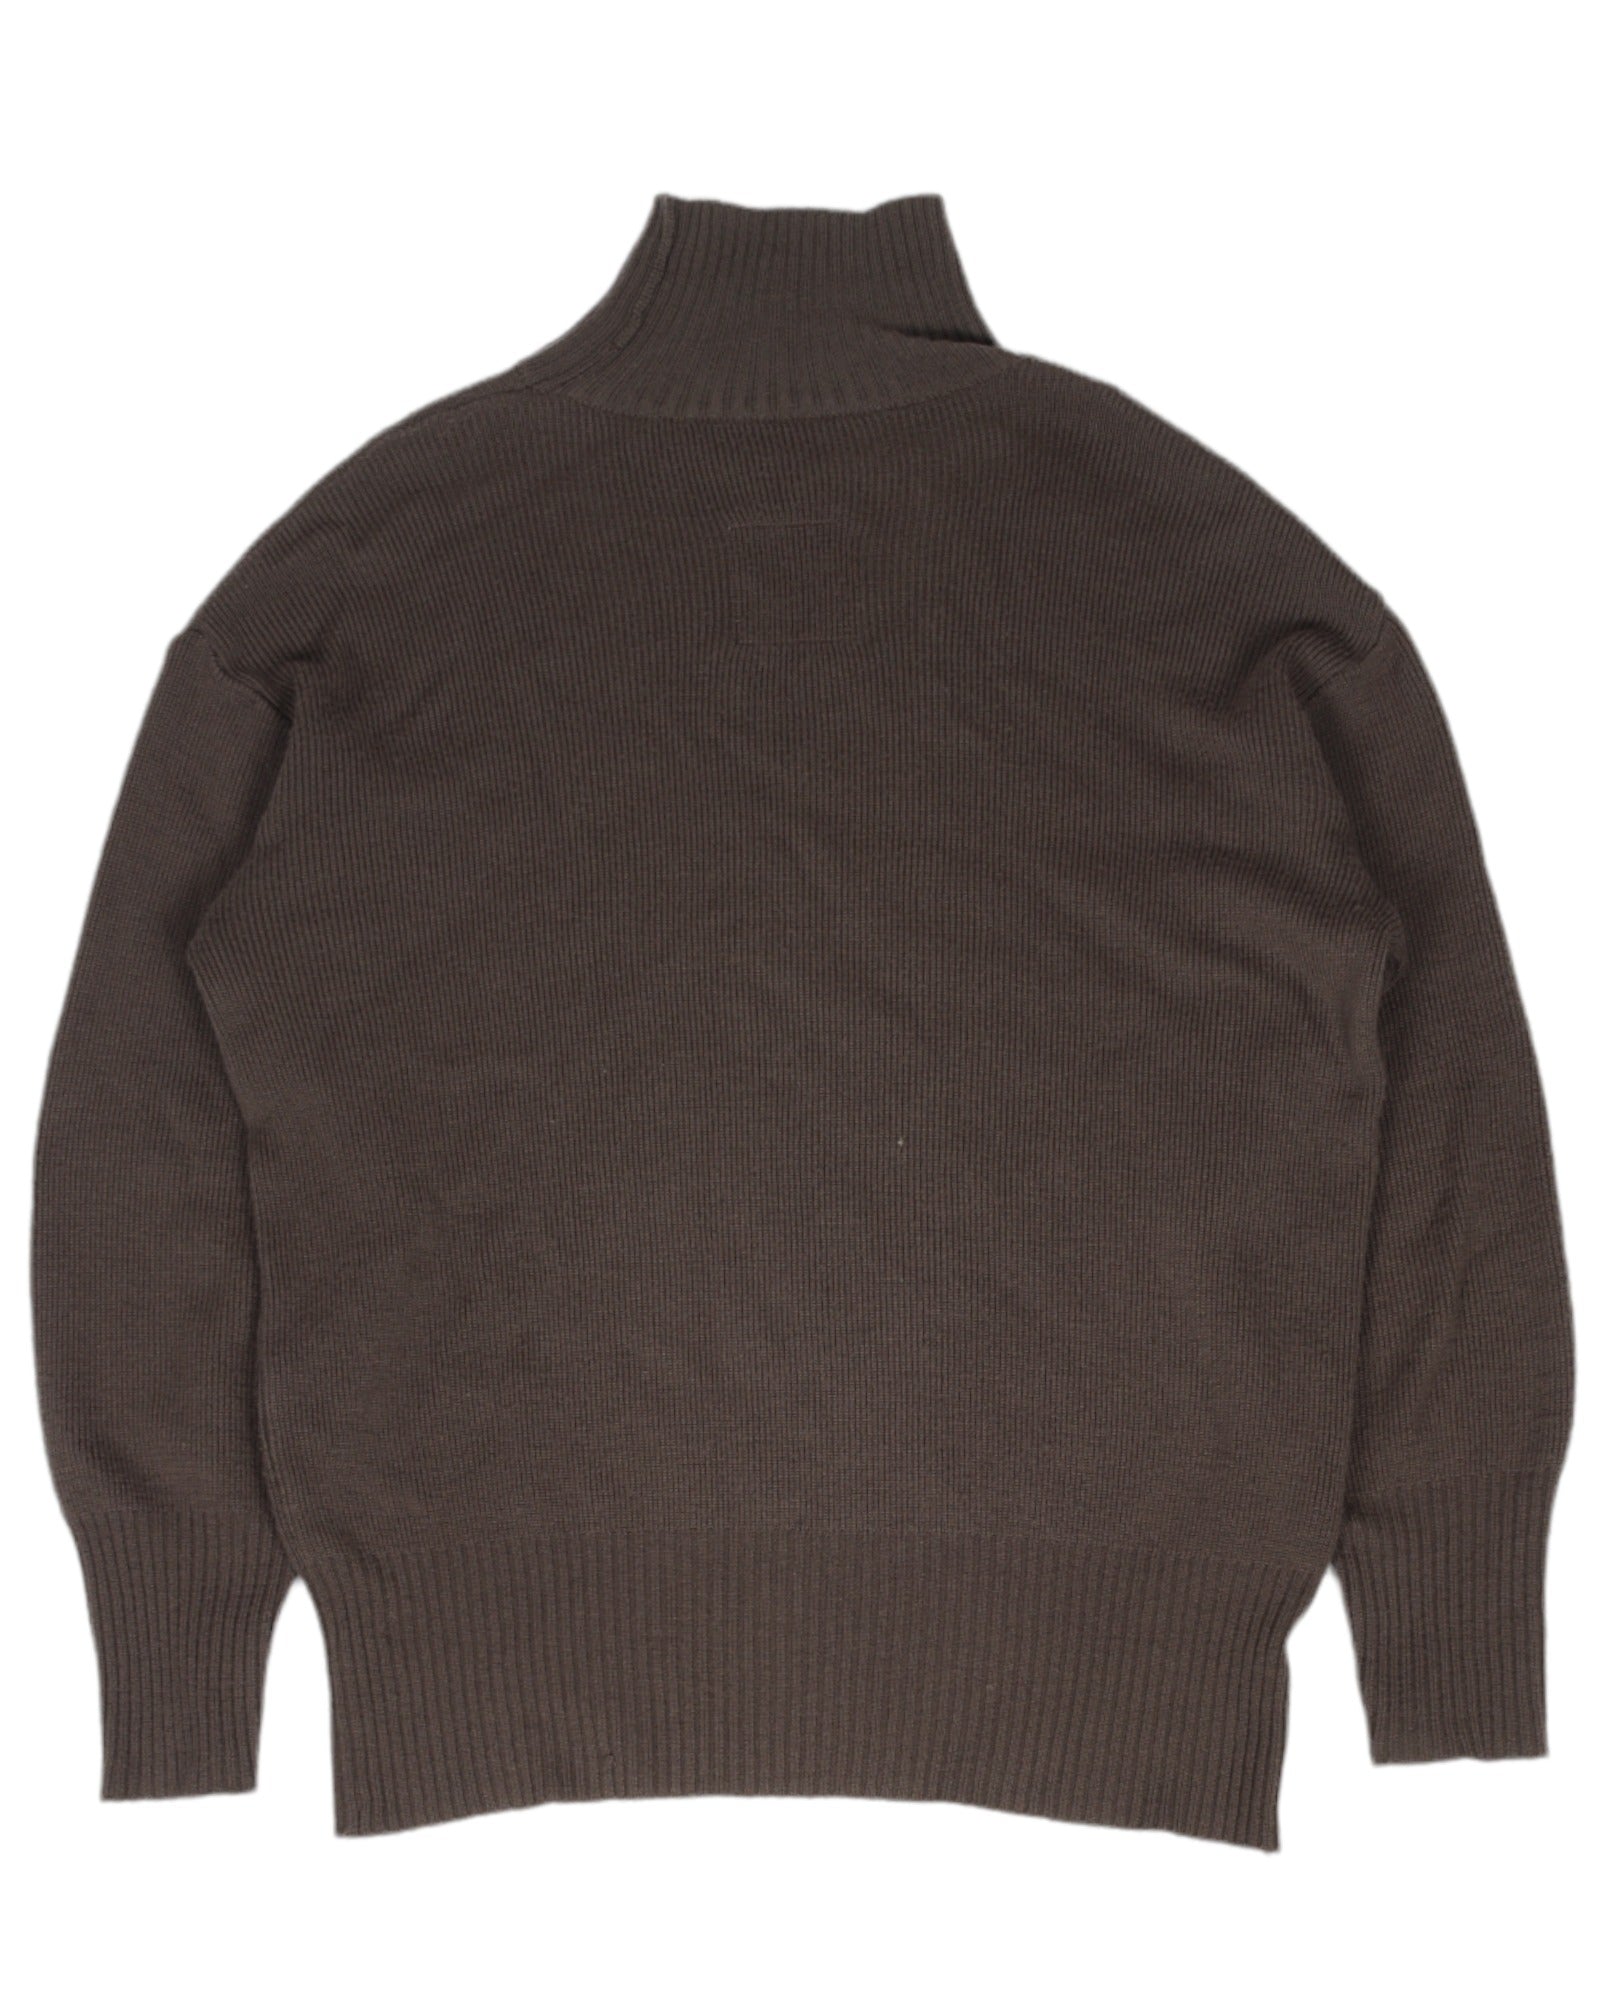 2001 Wool-Cashmere Blend Turtleneck Sweater